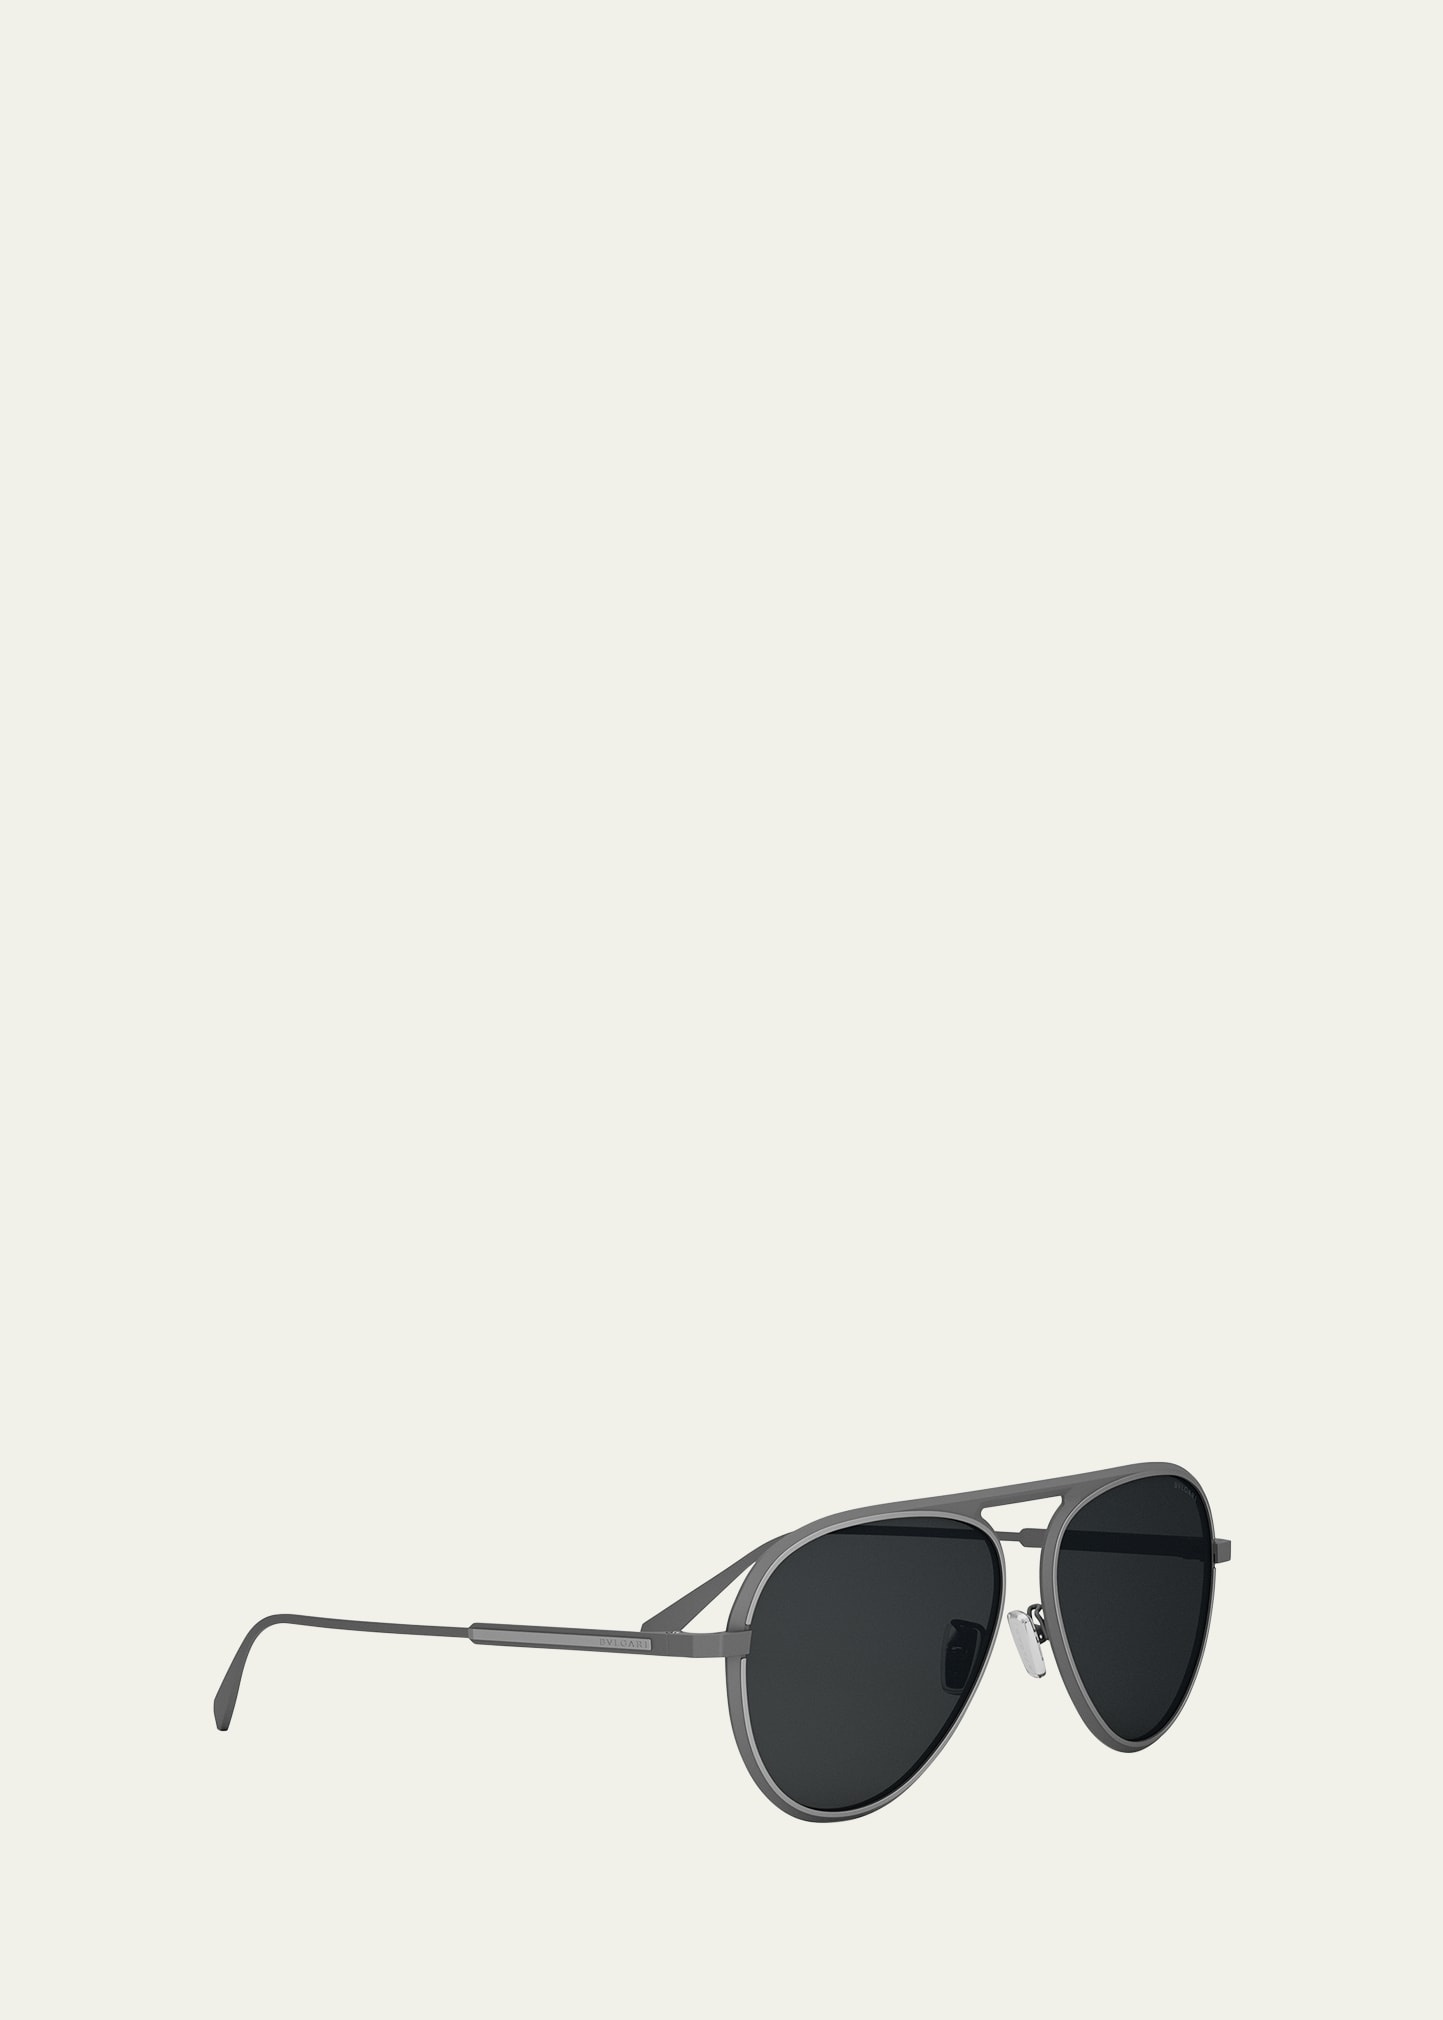 Octo Pilot Sunglasses - 2